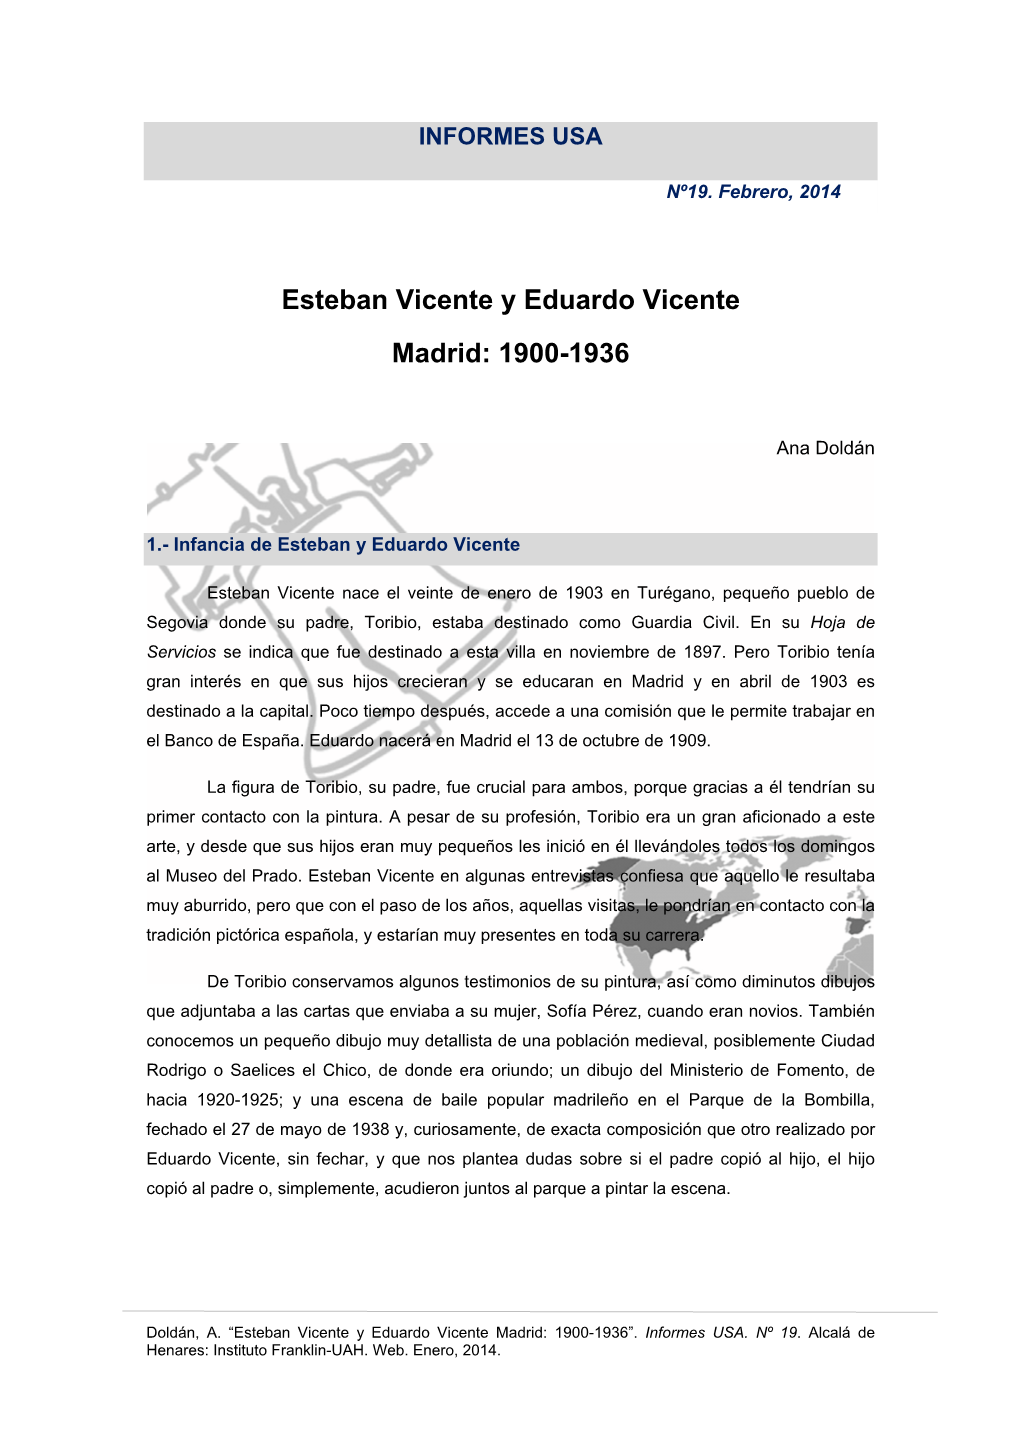 Esteban Vicente Y Eduardo Vicente Madrid: 1900-1936